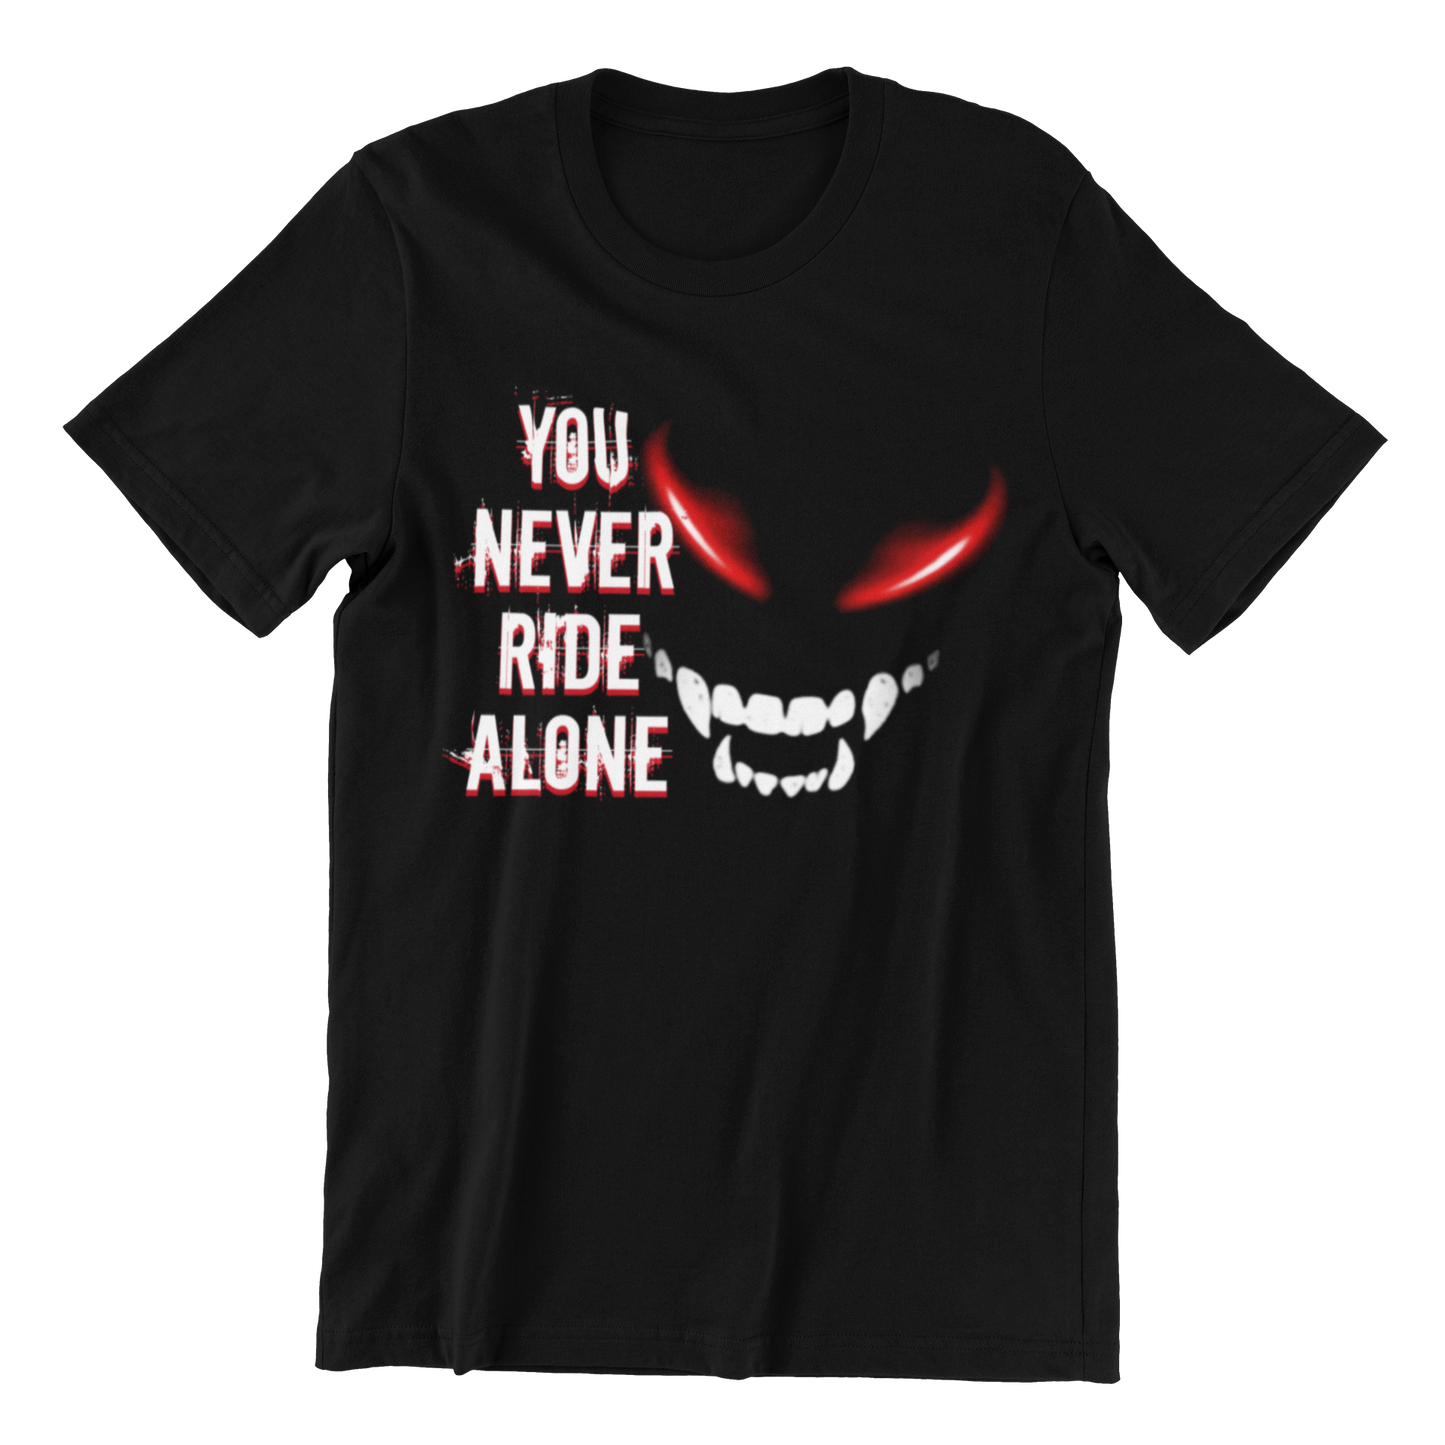 You never ride alone - Premium T-Shirt